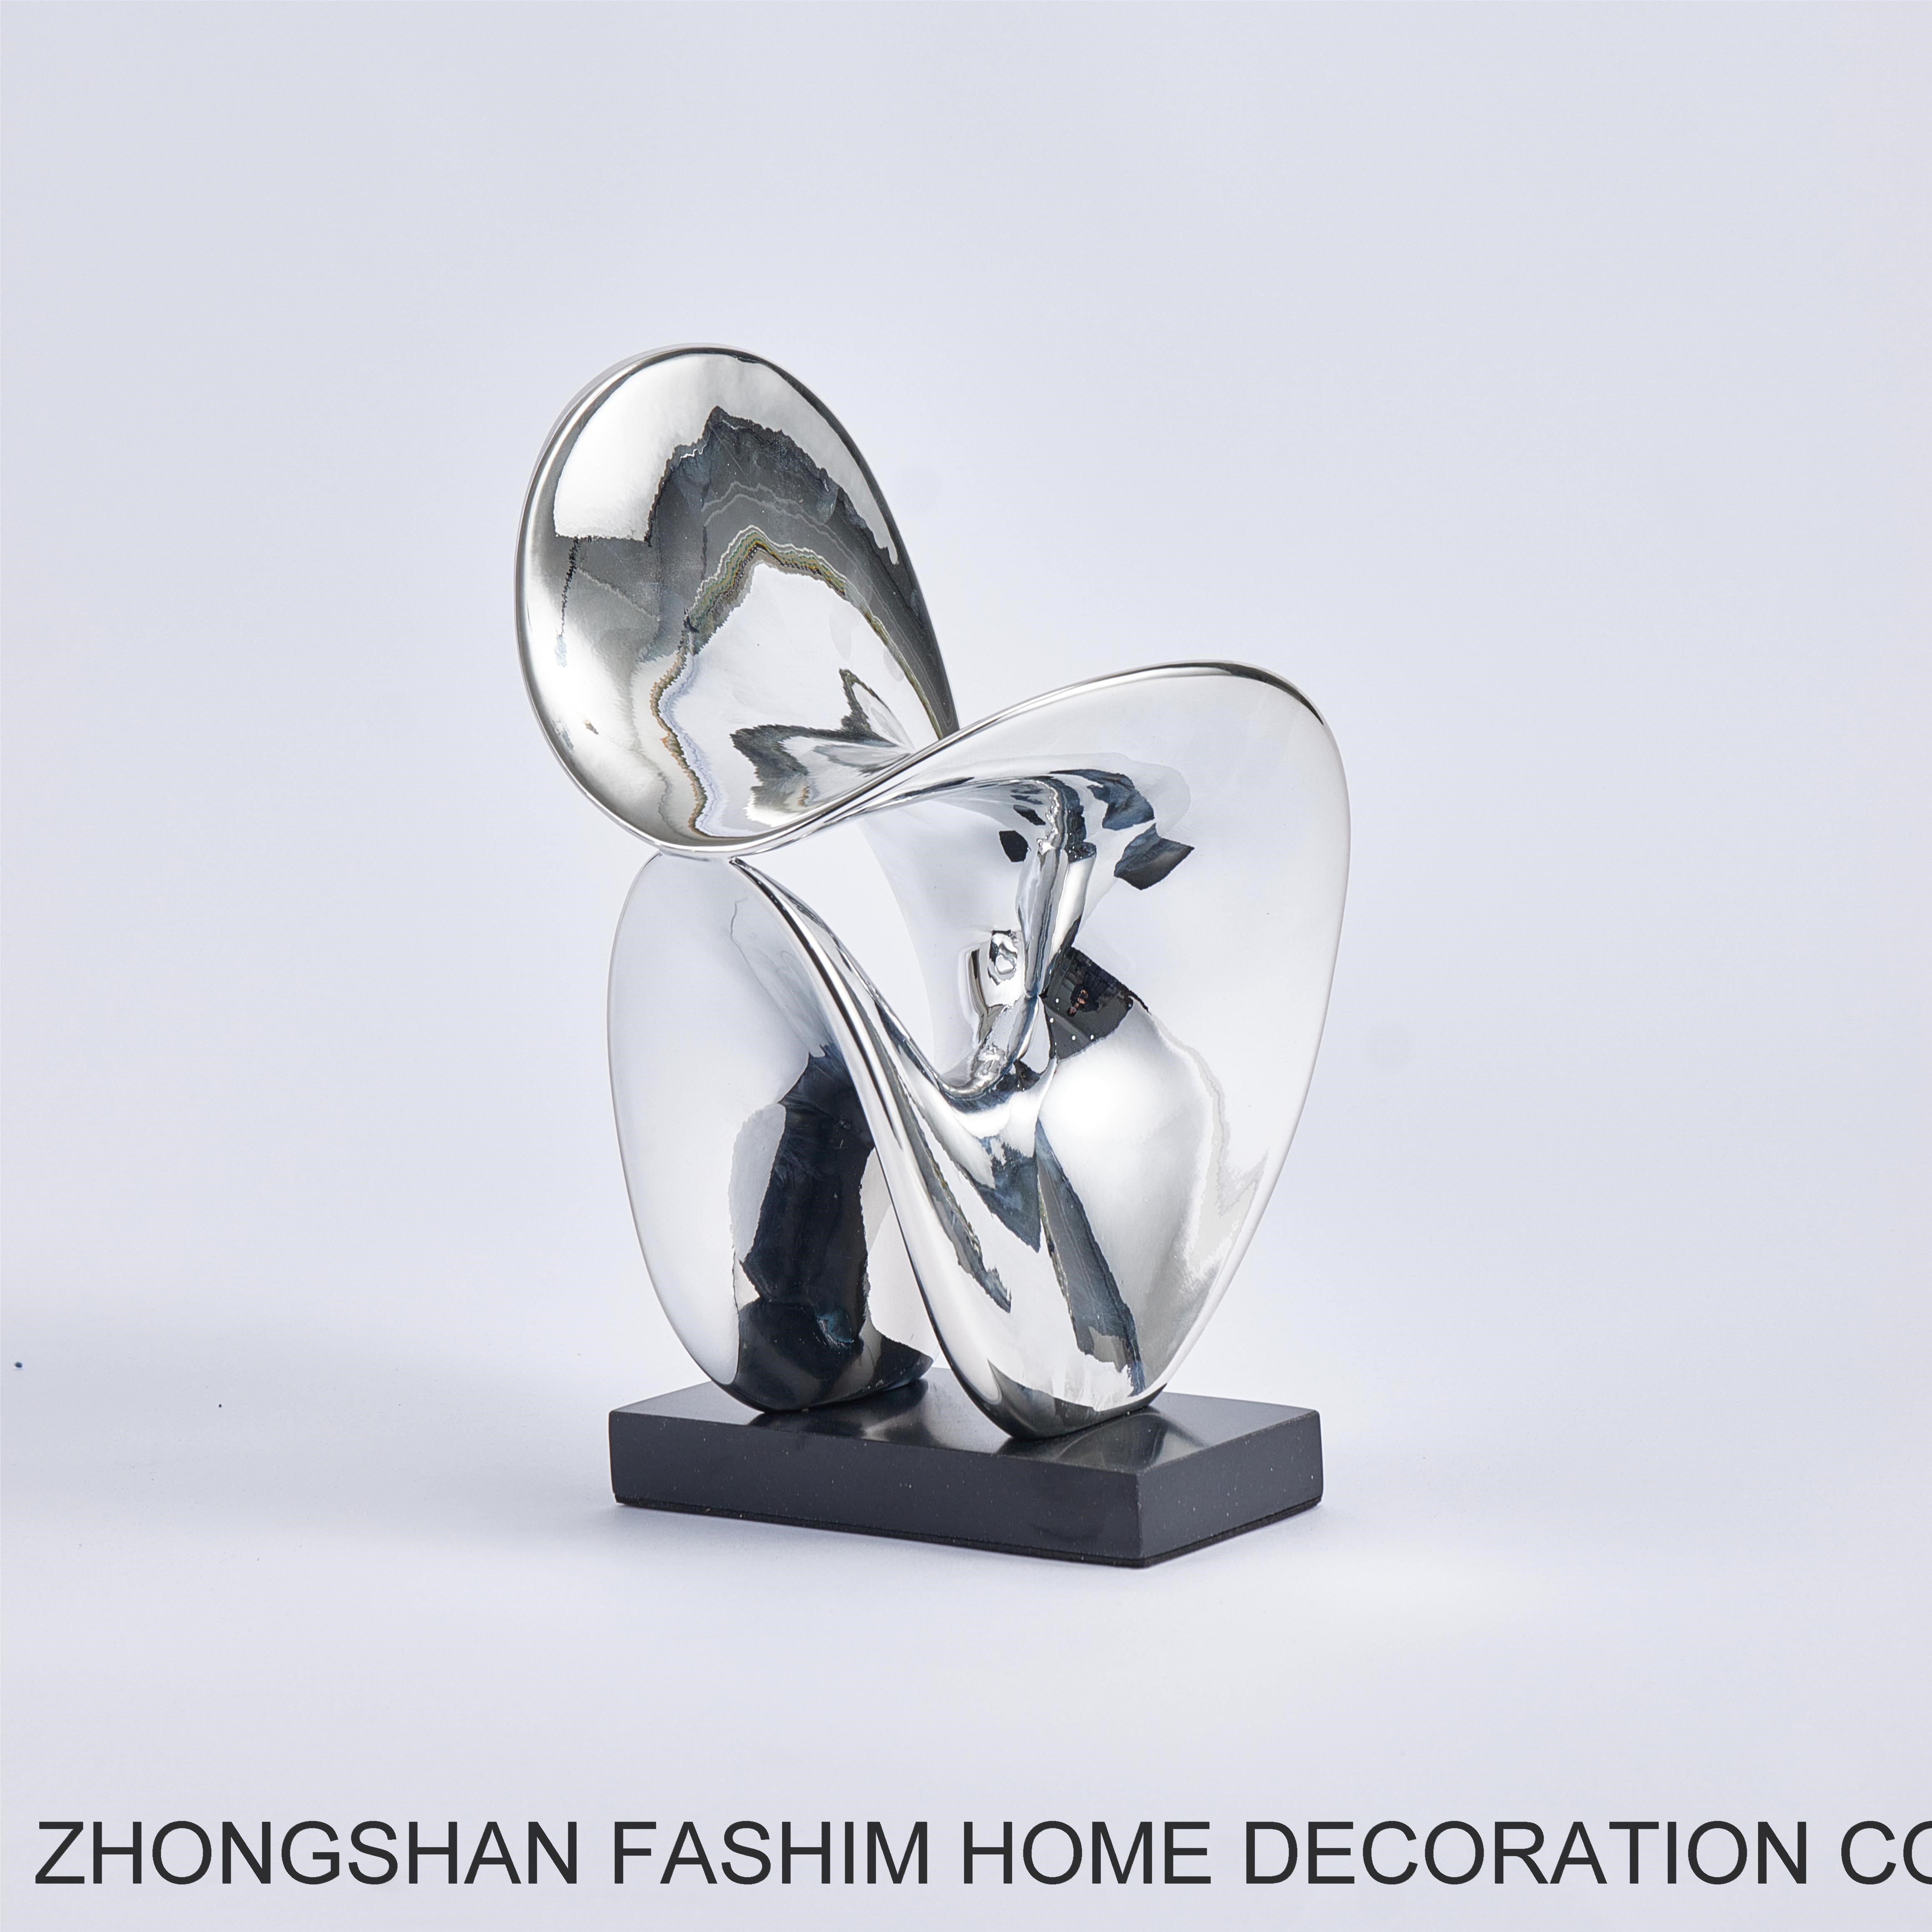 Fashimdecor modern home decoration sculpture ornaments